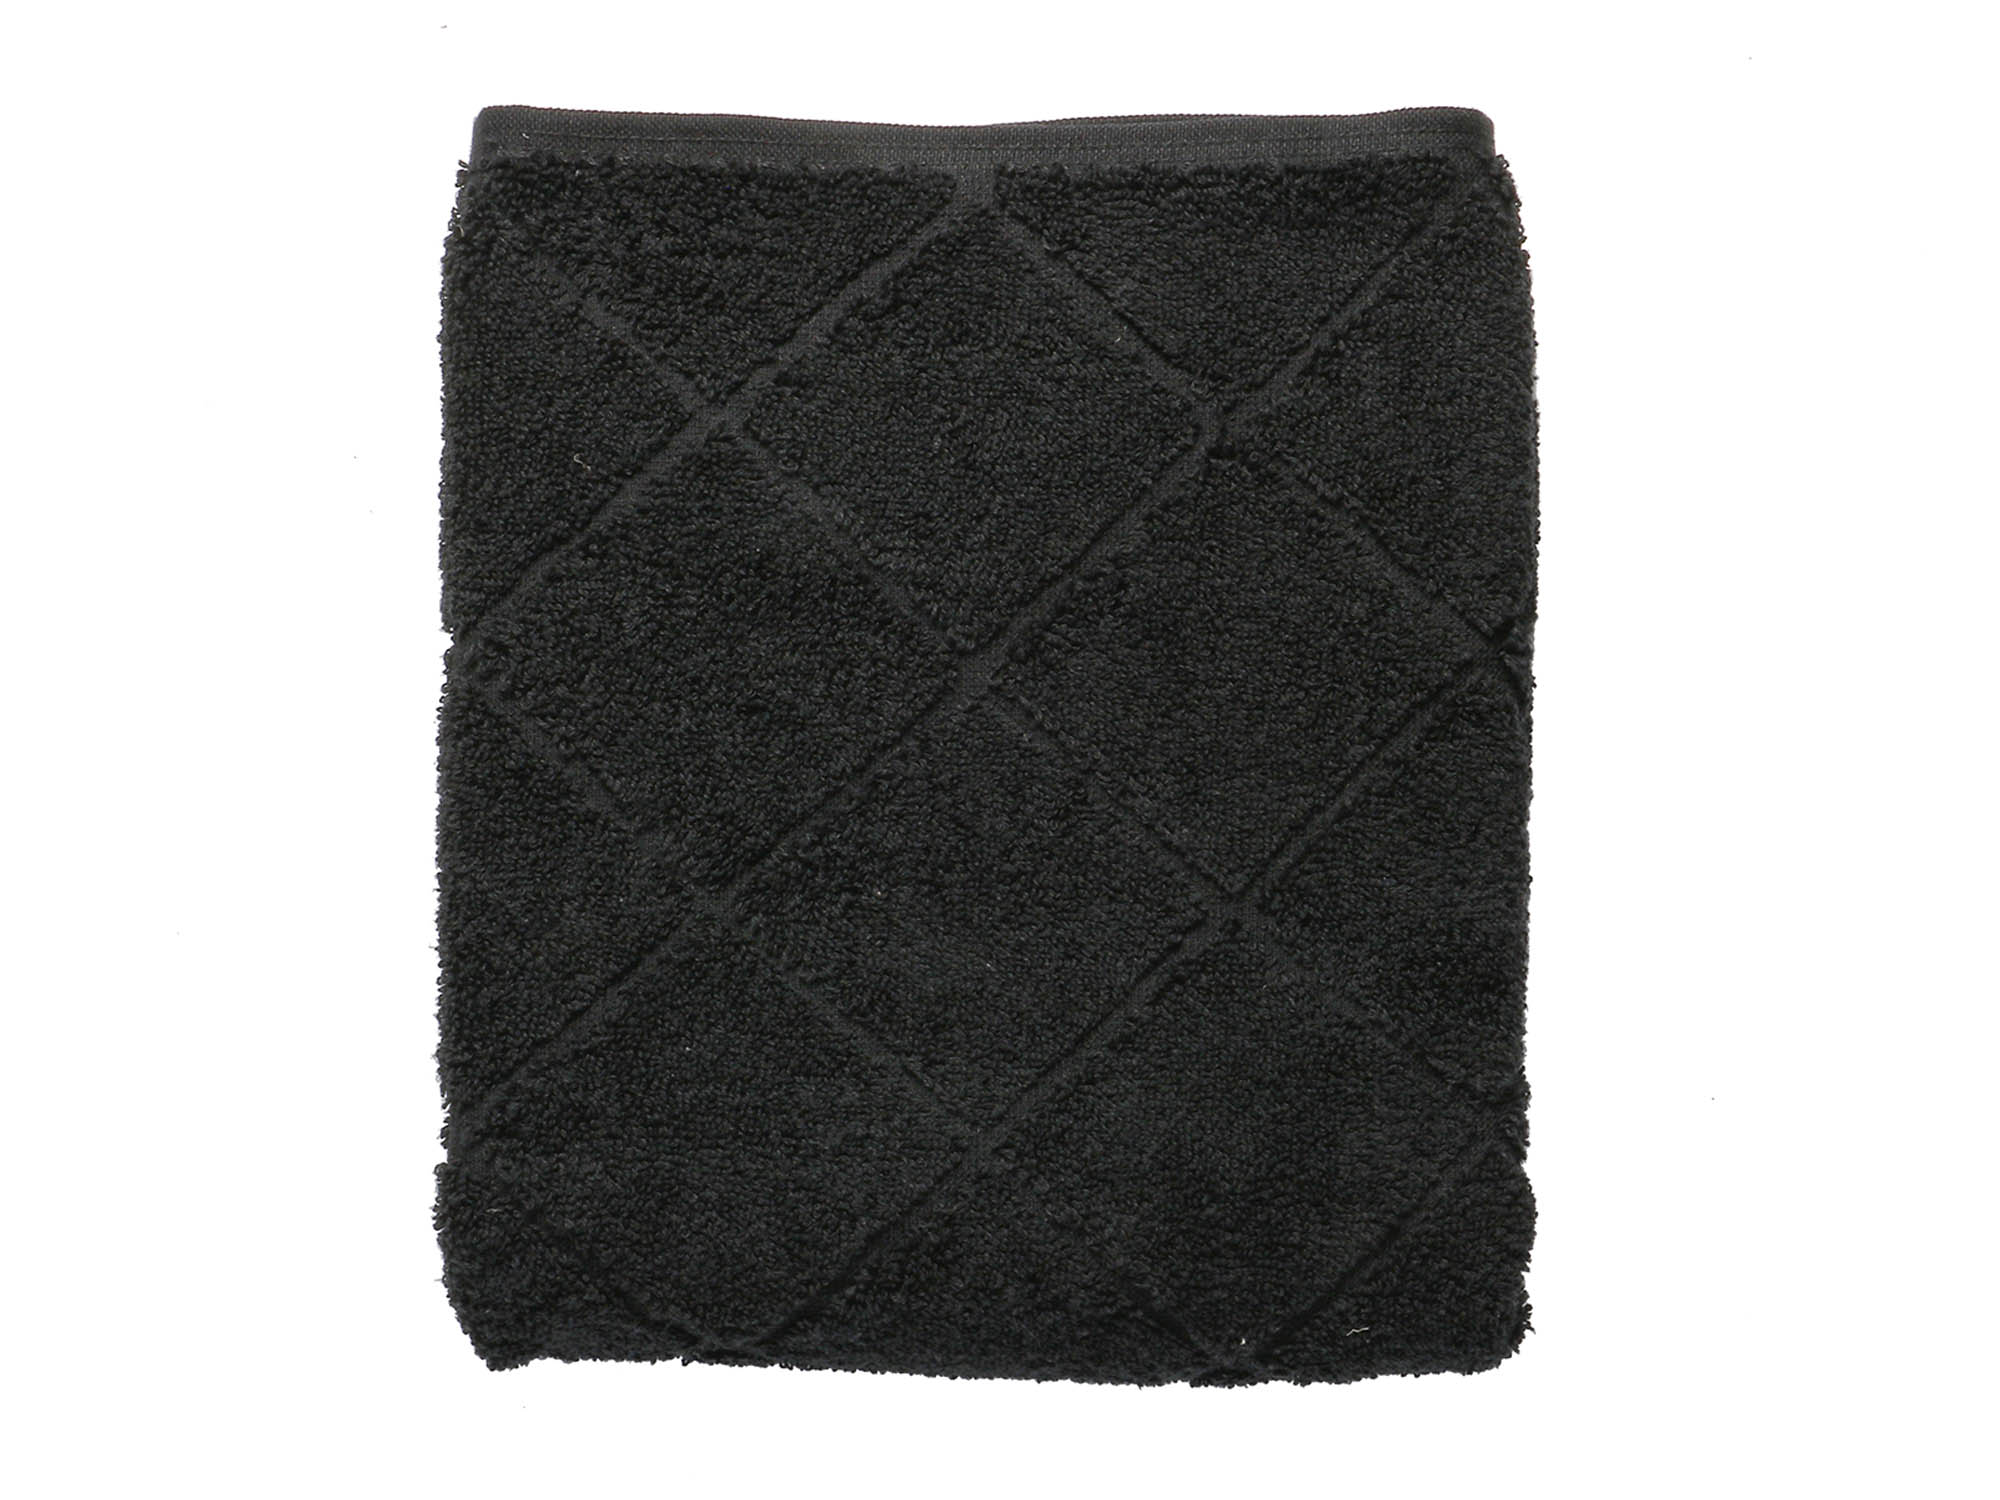 BATHROOM TOWEL RESTFUL BLACK 600GSM 70X140